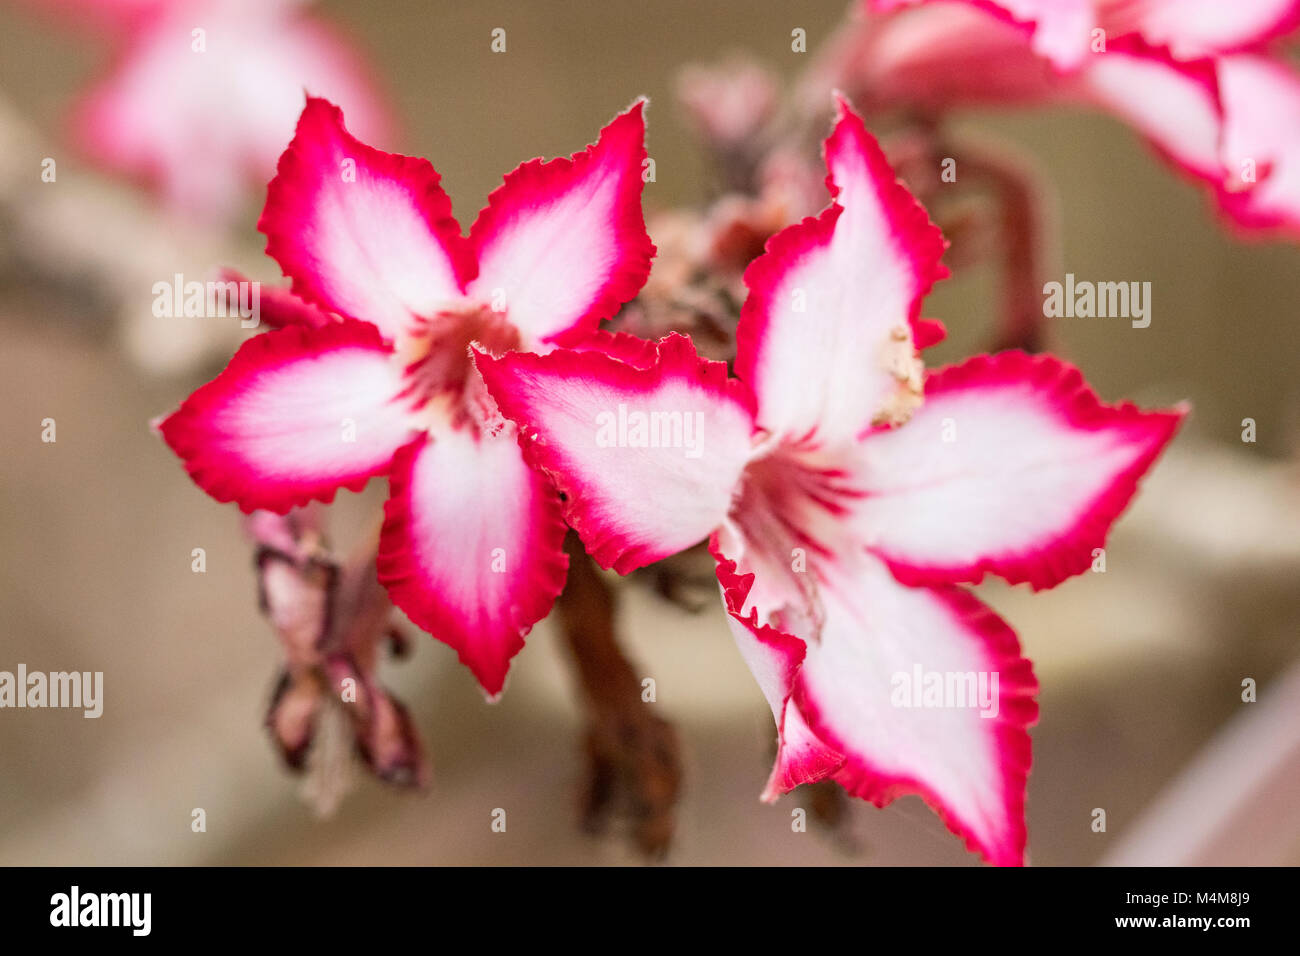 Adenium multiflorum flowers. Close up of pink and white flowers. Stock Photo